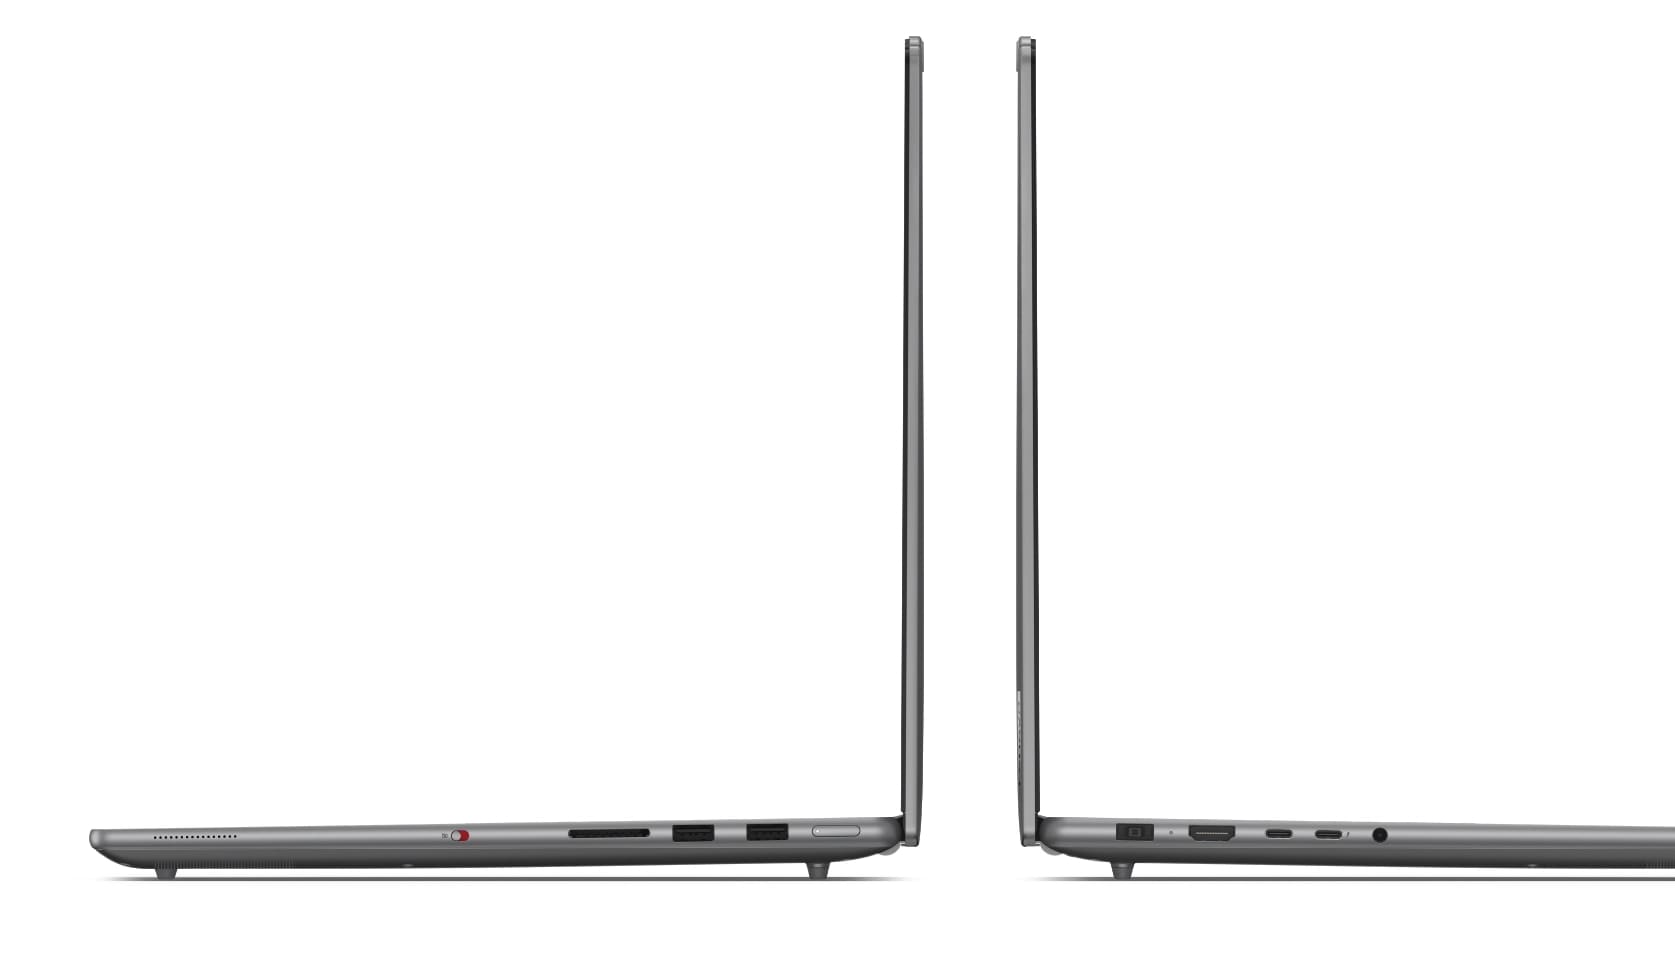 Lenovo Yoga Pro 9i Gen 9 (16” Intel) 左右側視圖，裝置打開 90 度，顯示連接埠與接頭